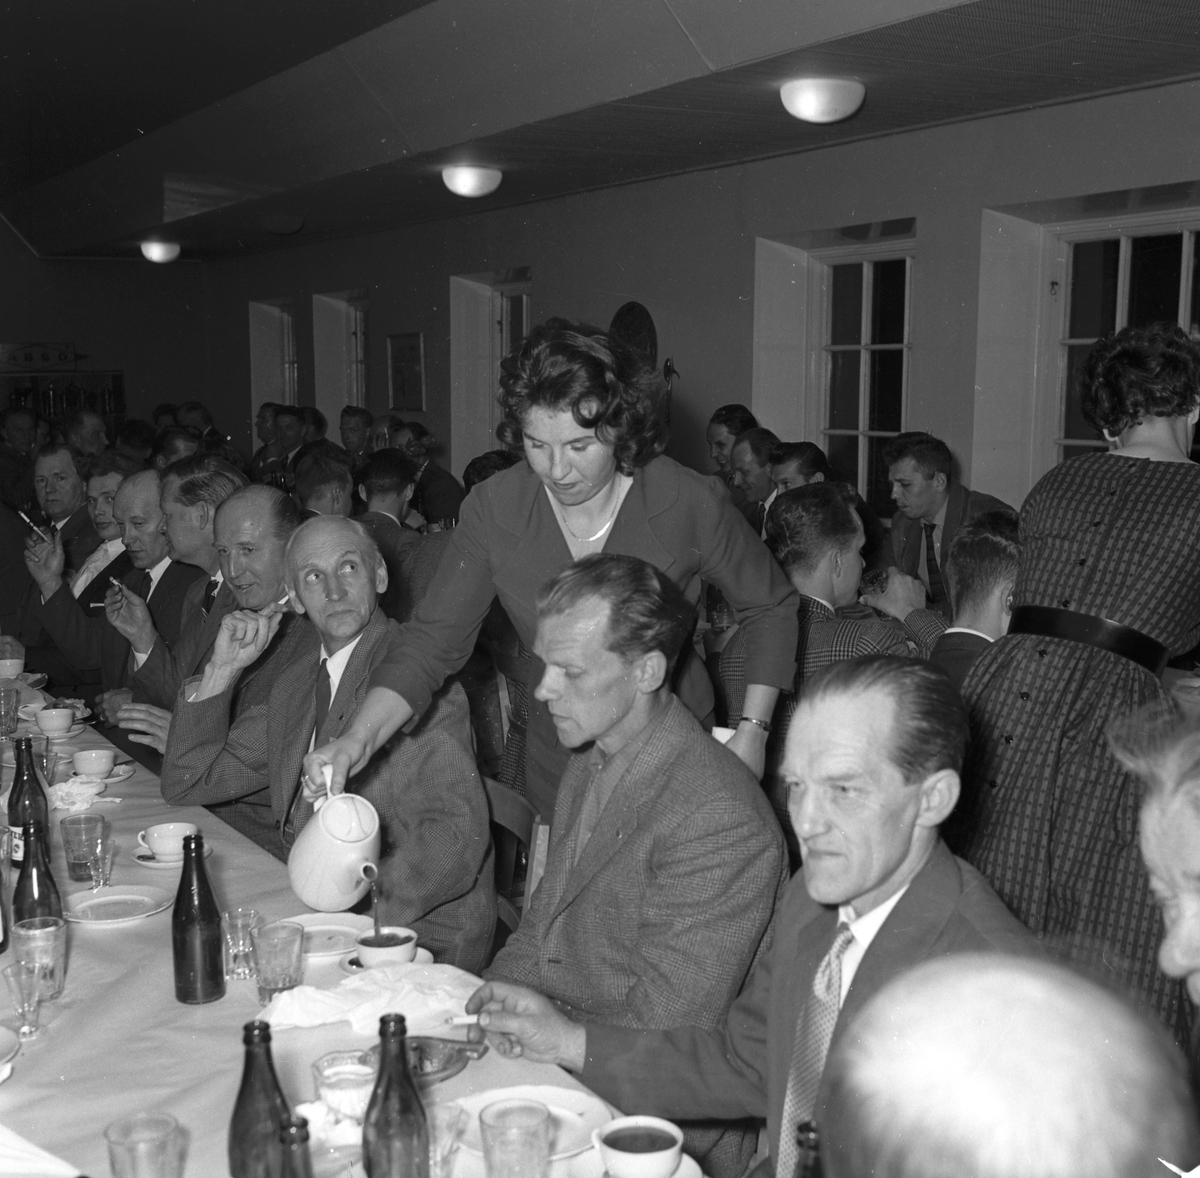 Järnhandlarkonferens, Skoglund & Olson AB.  27 maj 1959.